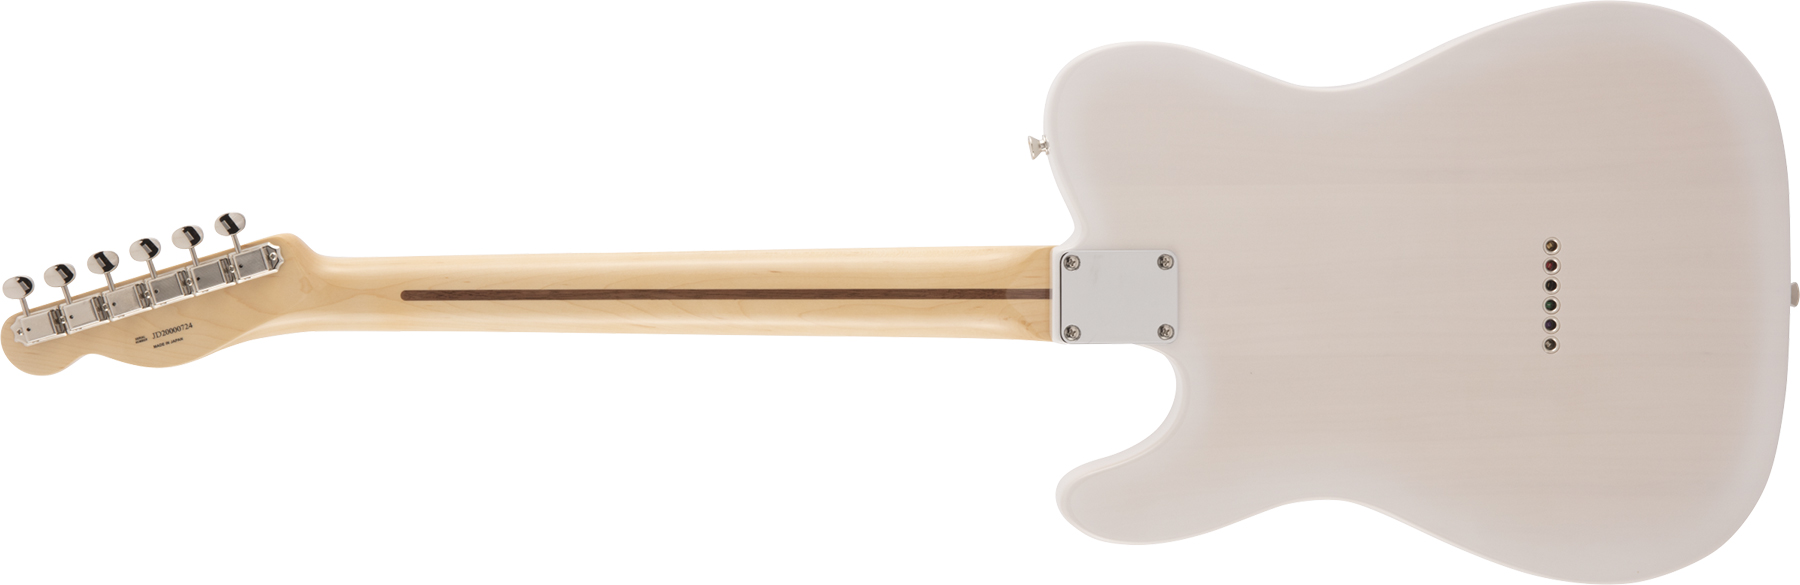 Fender Tele Traditional 50s Jap Mn - White Blonde - Guitarra eléctrica con forma de tel - Variation 1